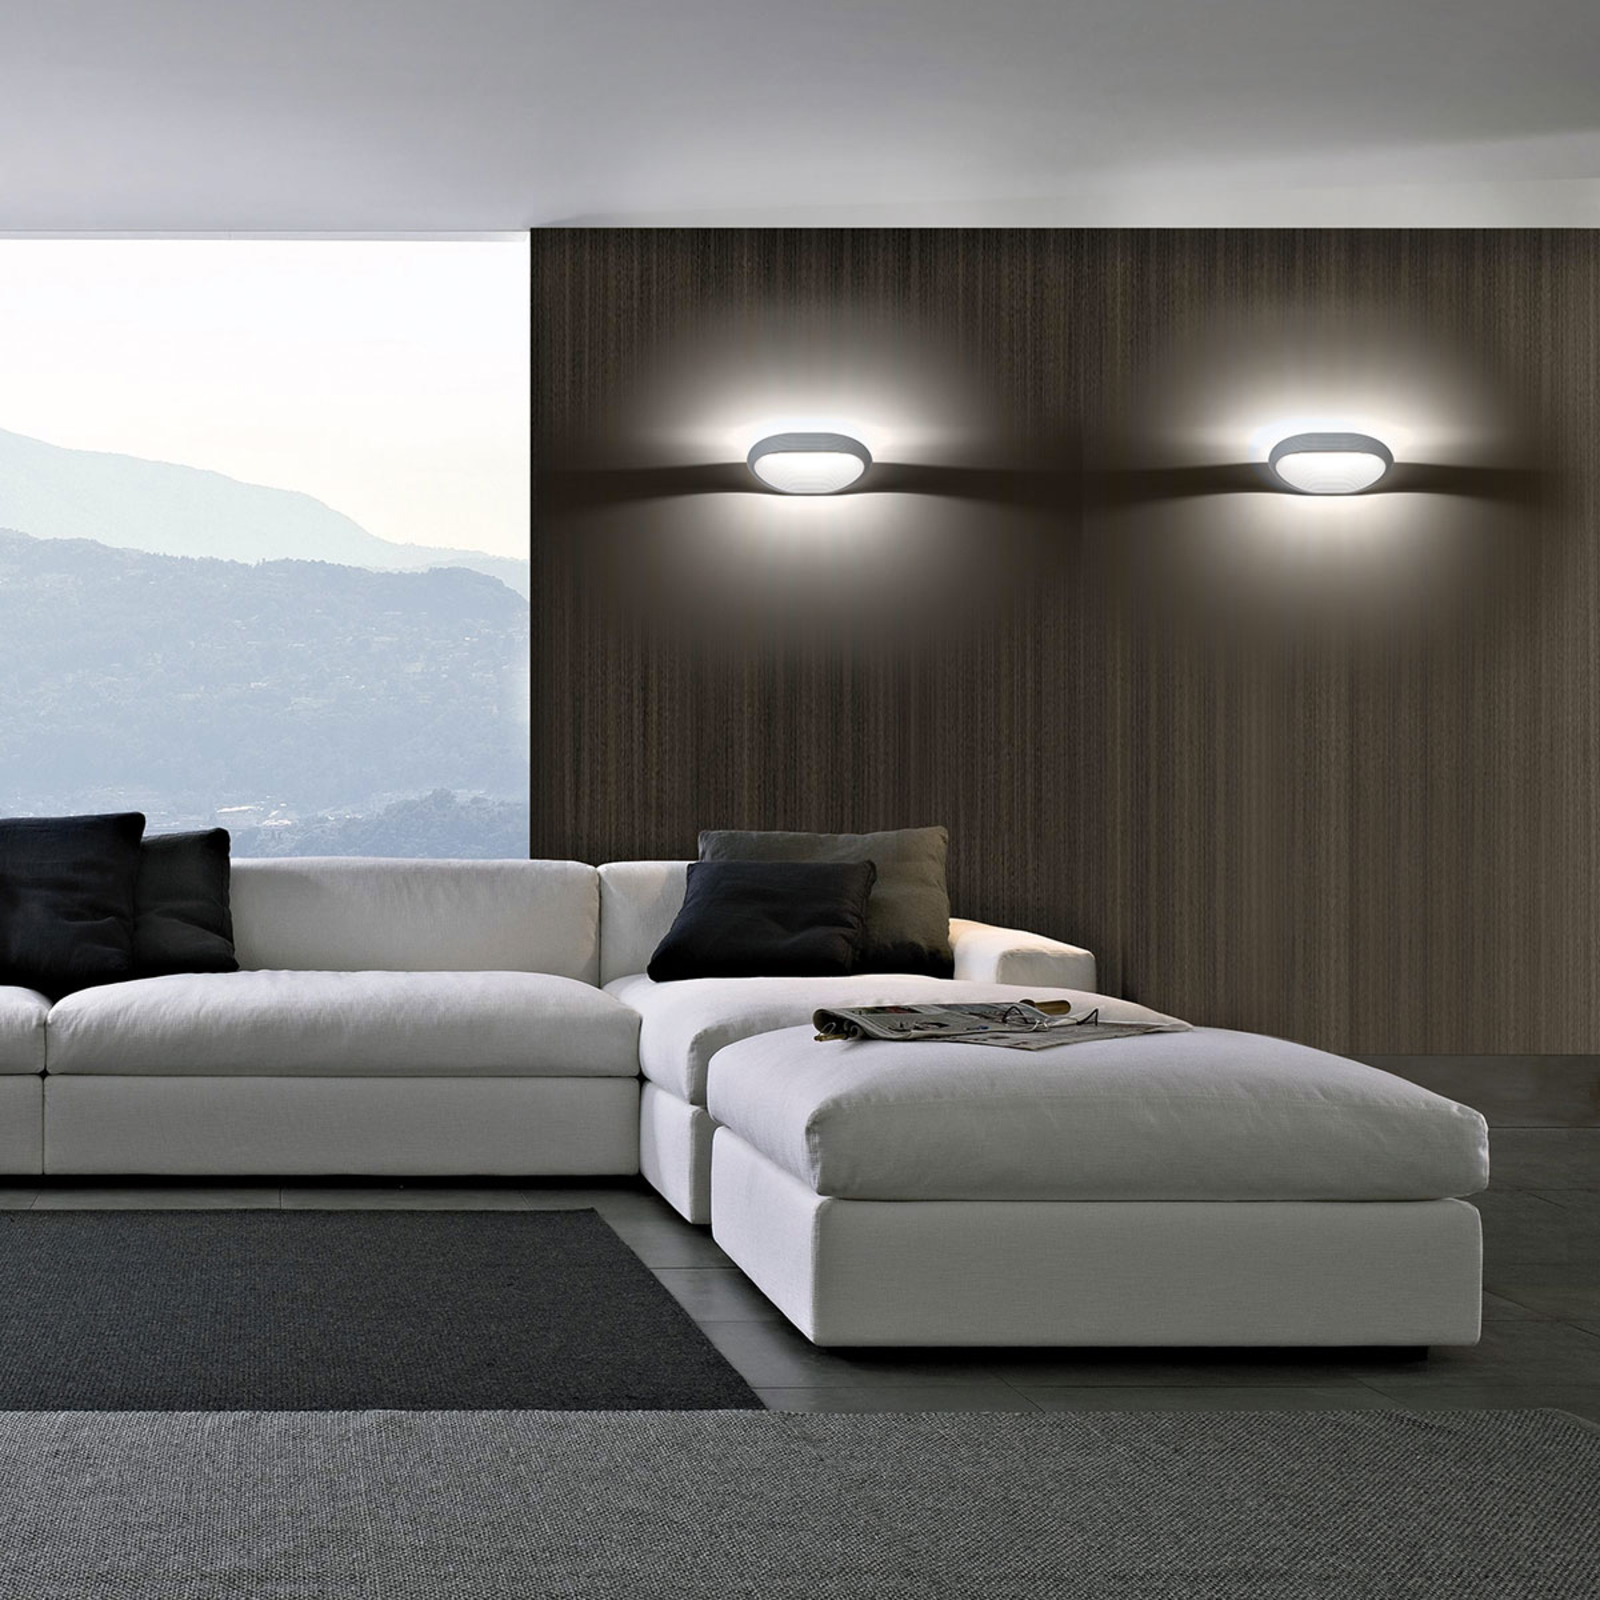 Cini&Nils Sestessa LED wall light, Casambi-compatible